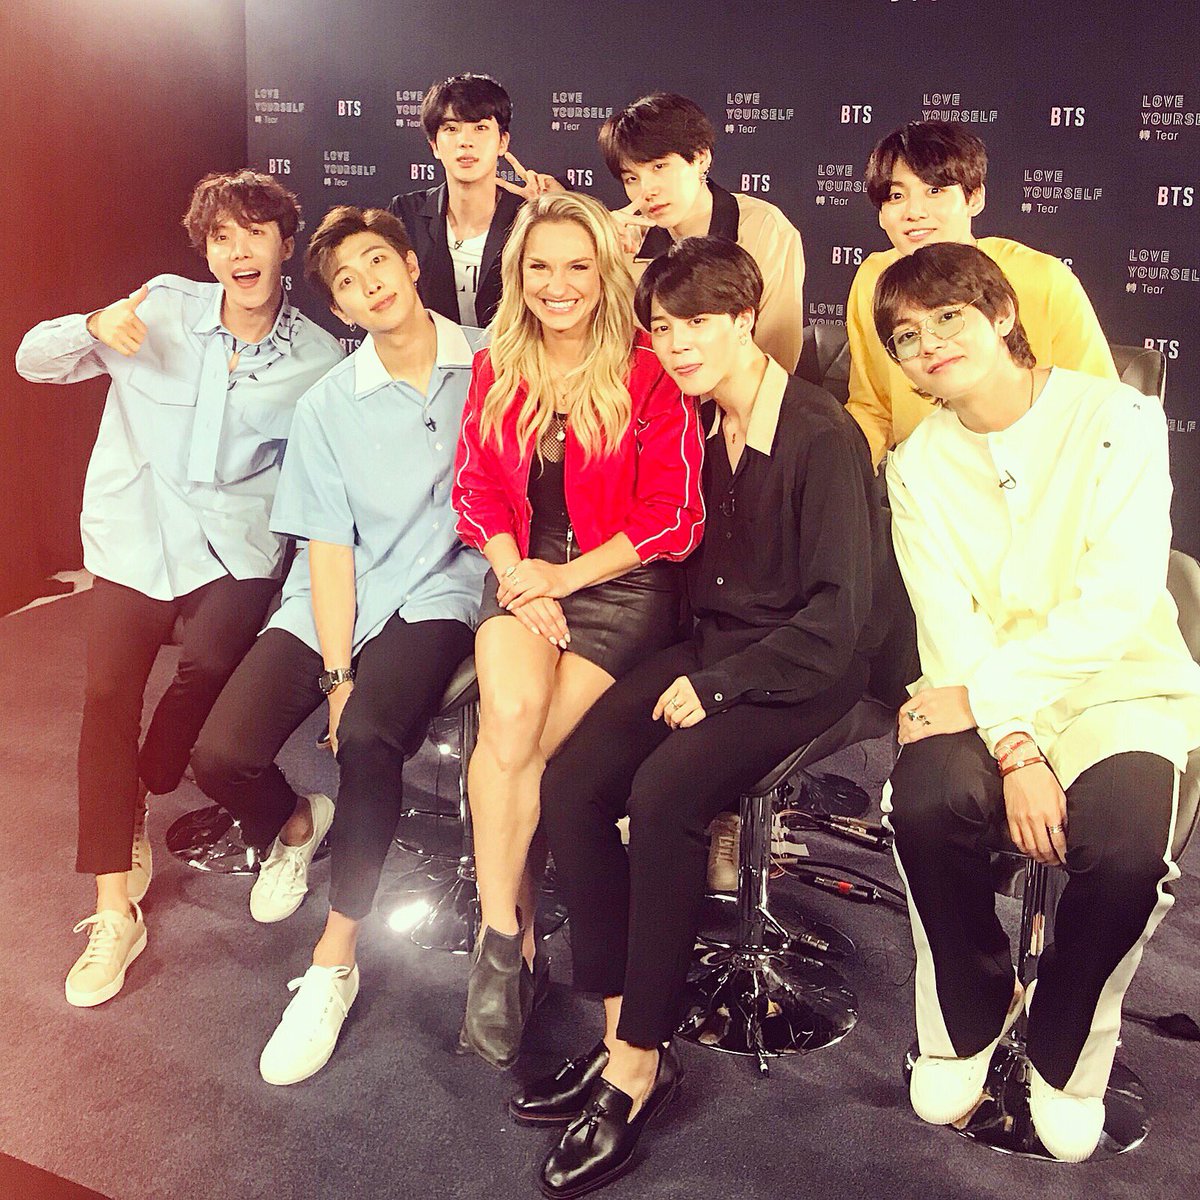 Bts interview. БТС интервью. BTS интервью. BTS Billboard 2018 Interview.